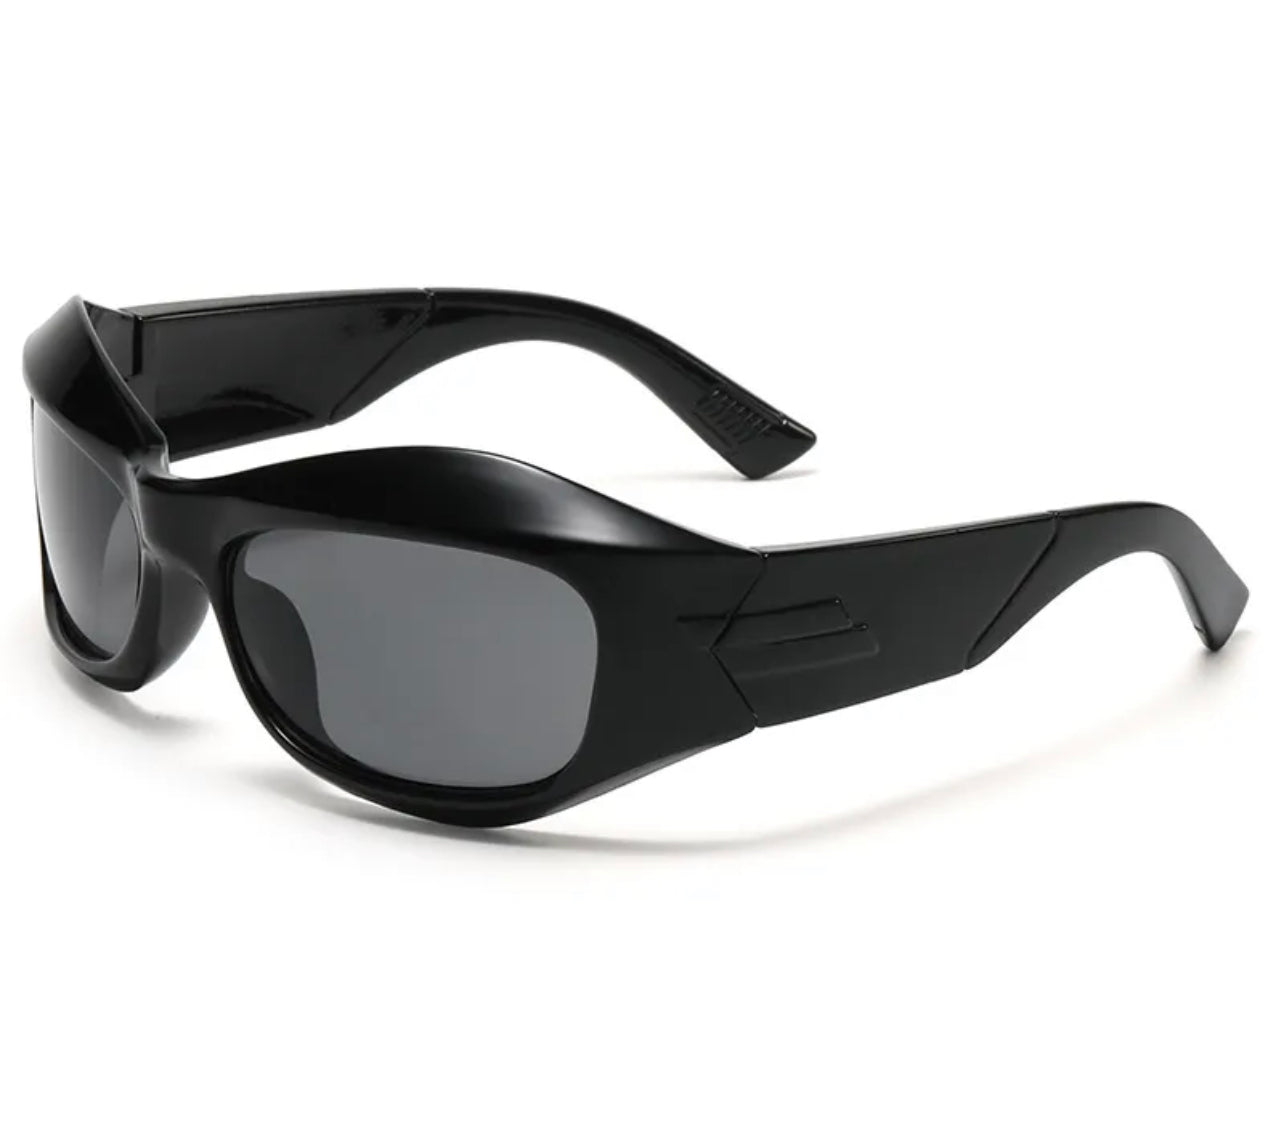 “Futuristic” Sunglasses